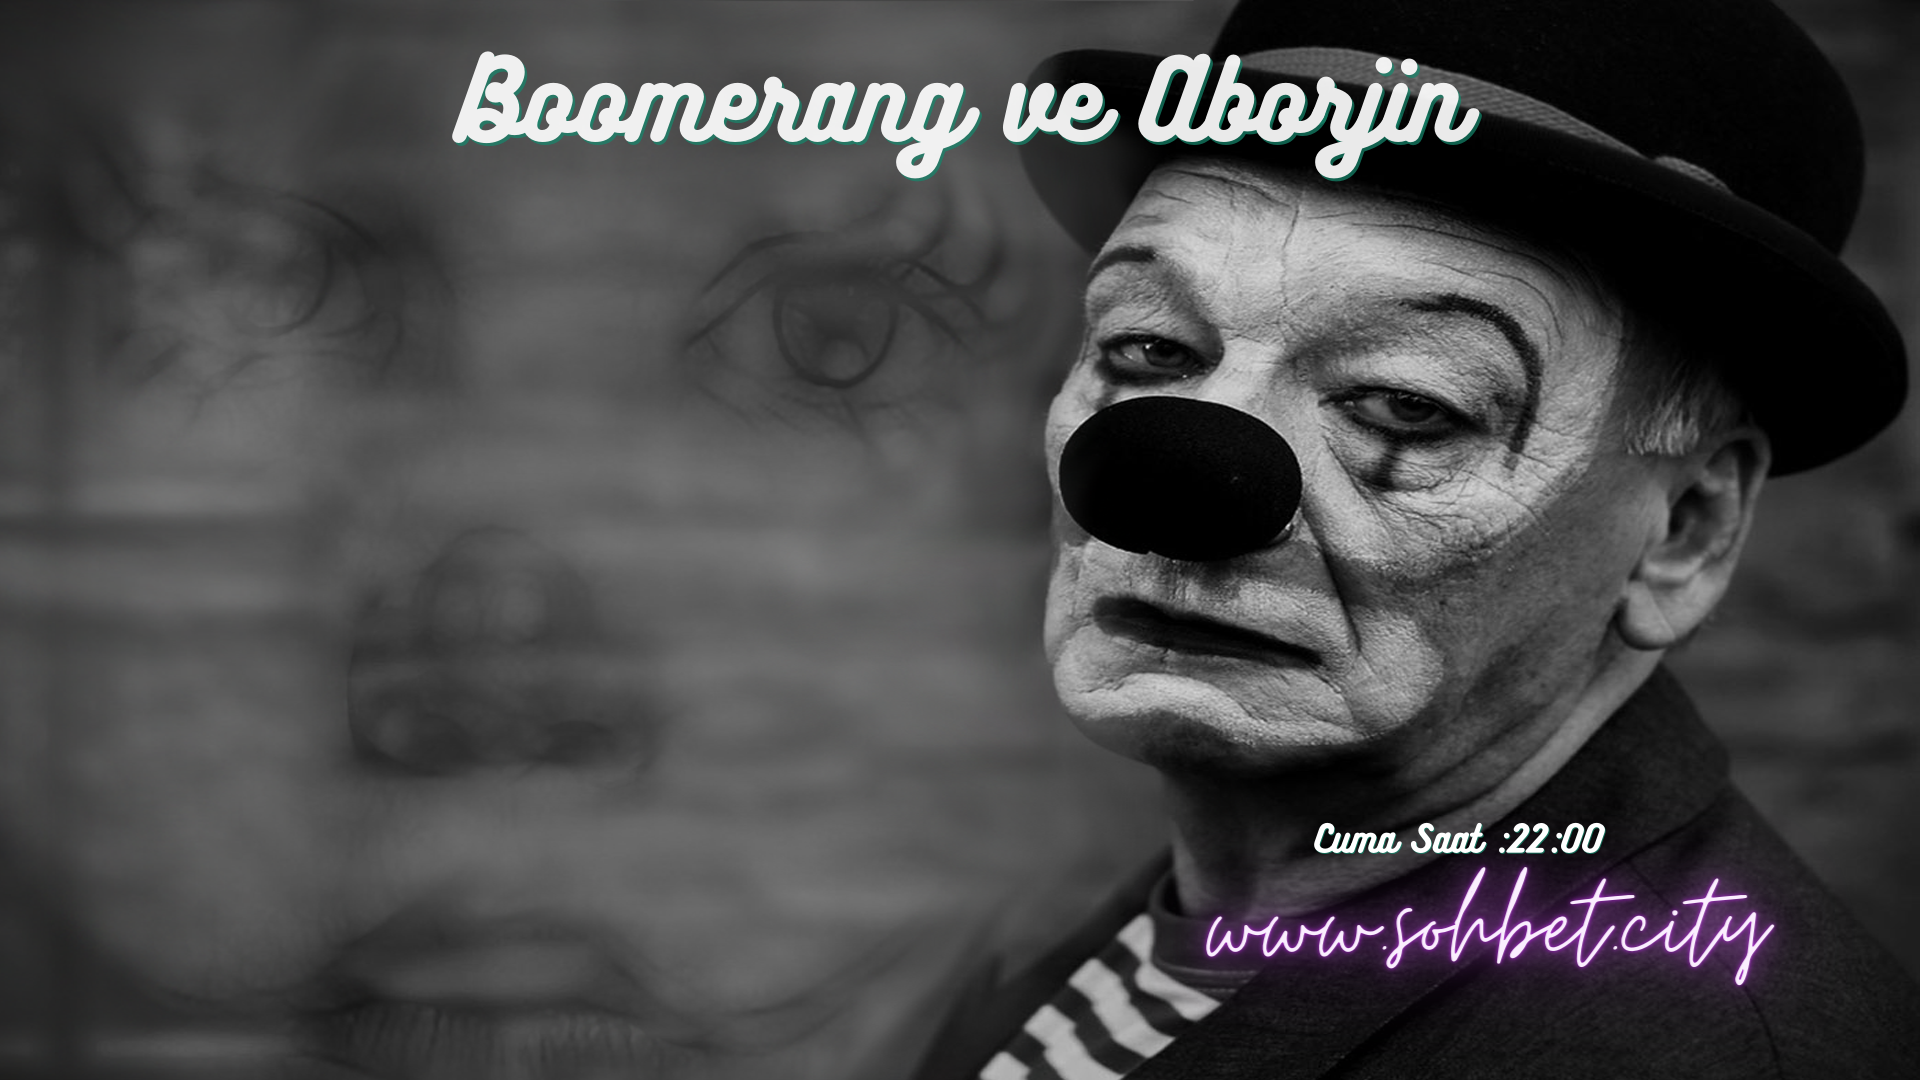 Boomerang ve Aborjin Show "Yaynda" - LimonFM.ORG